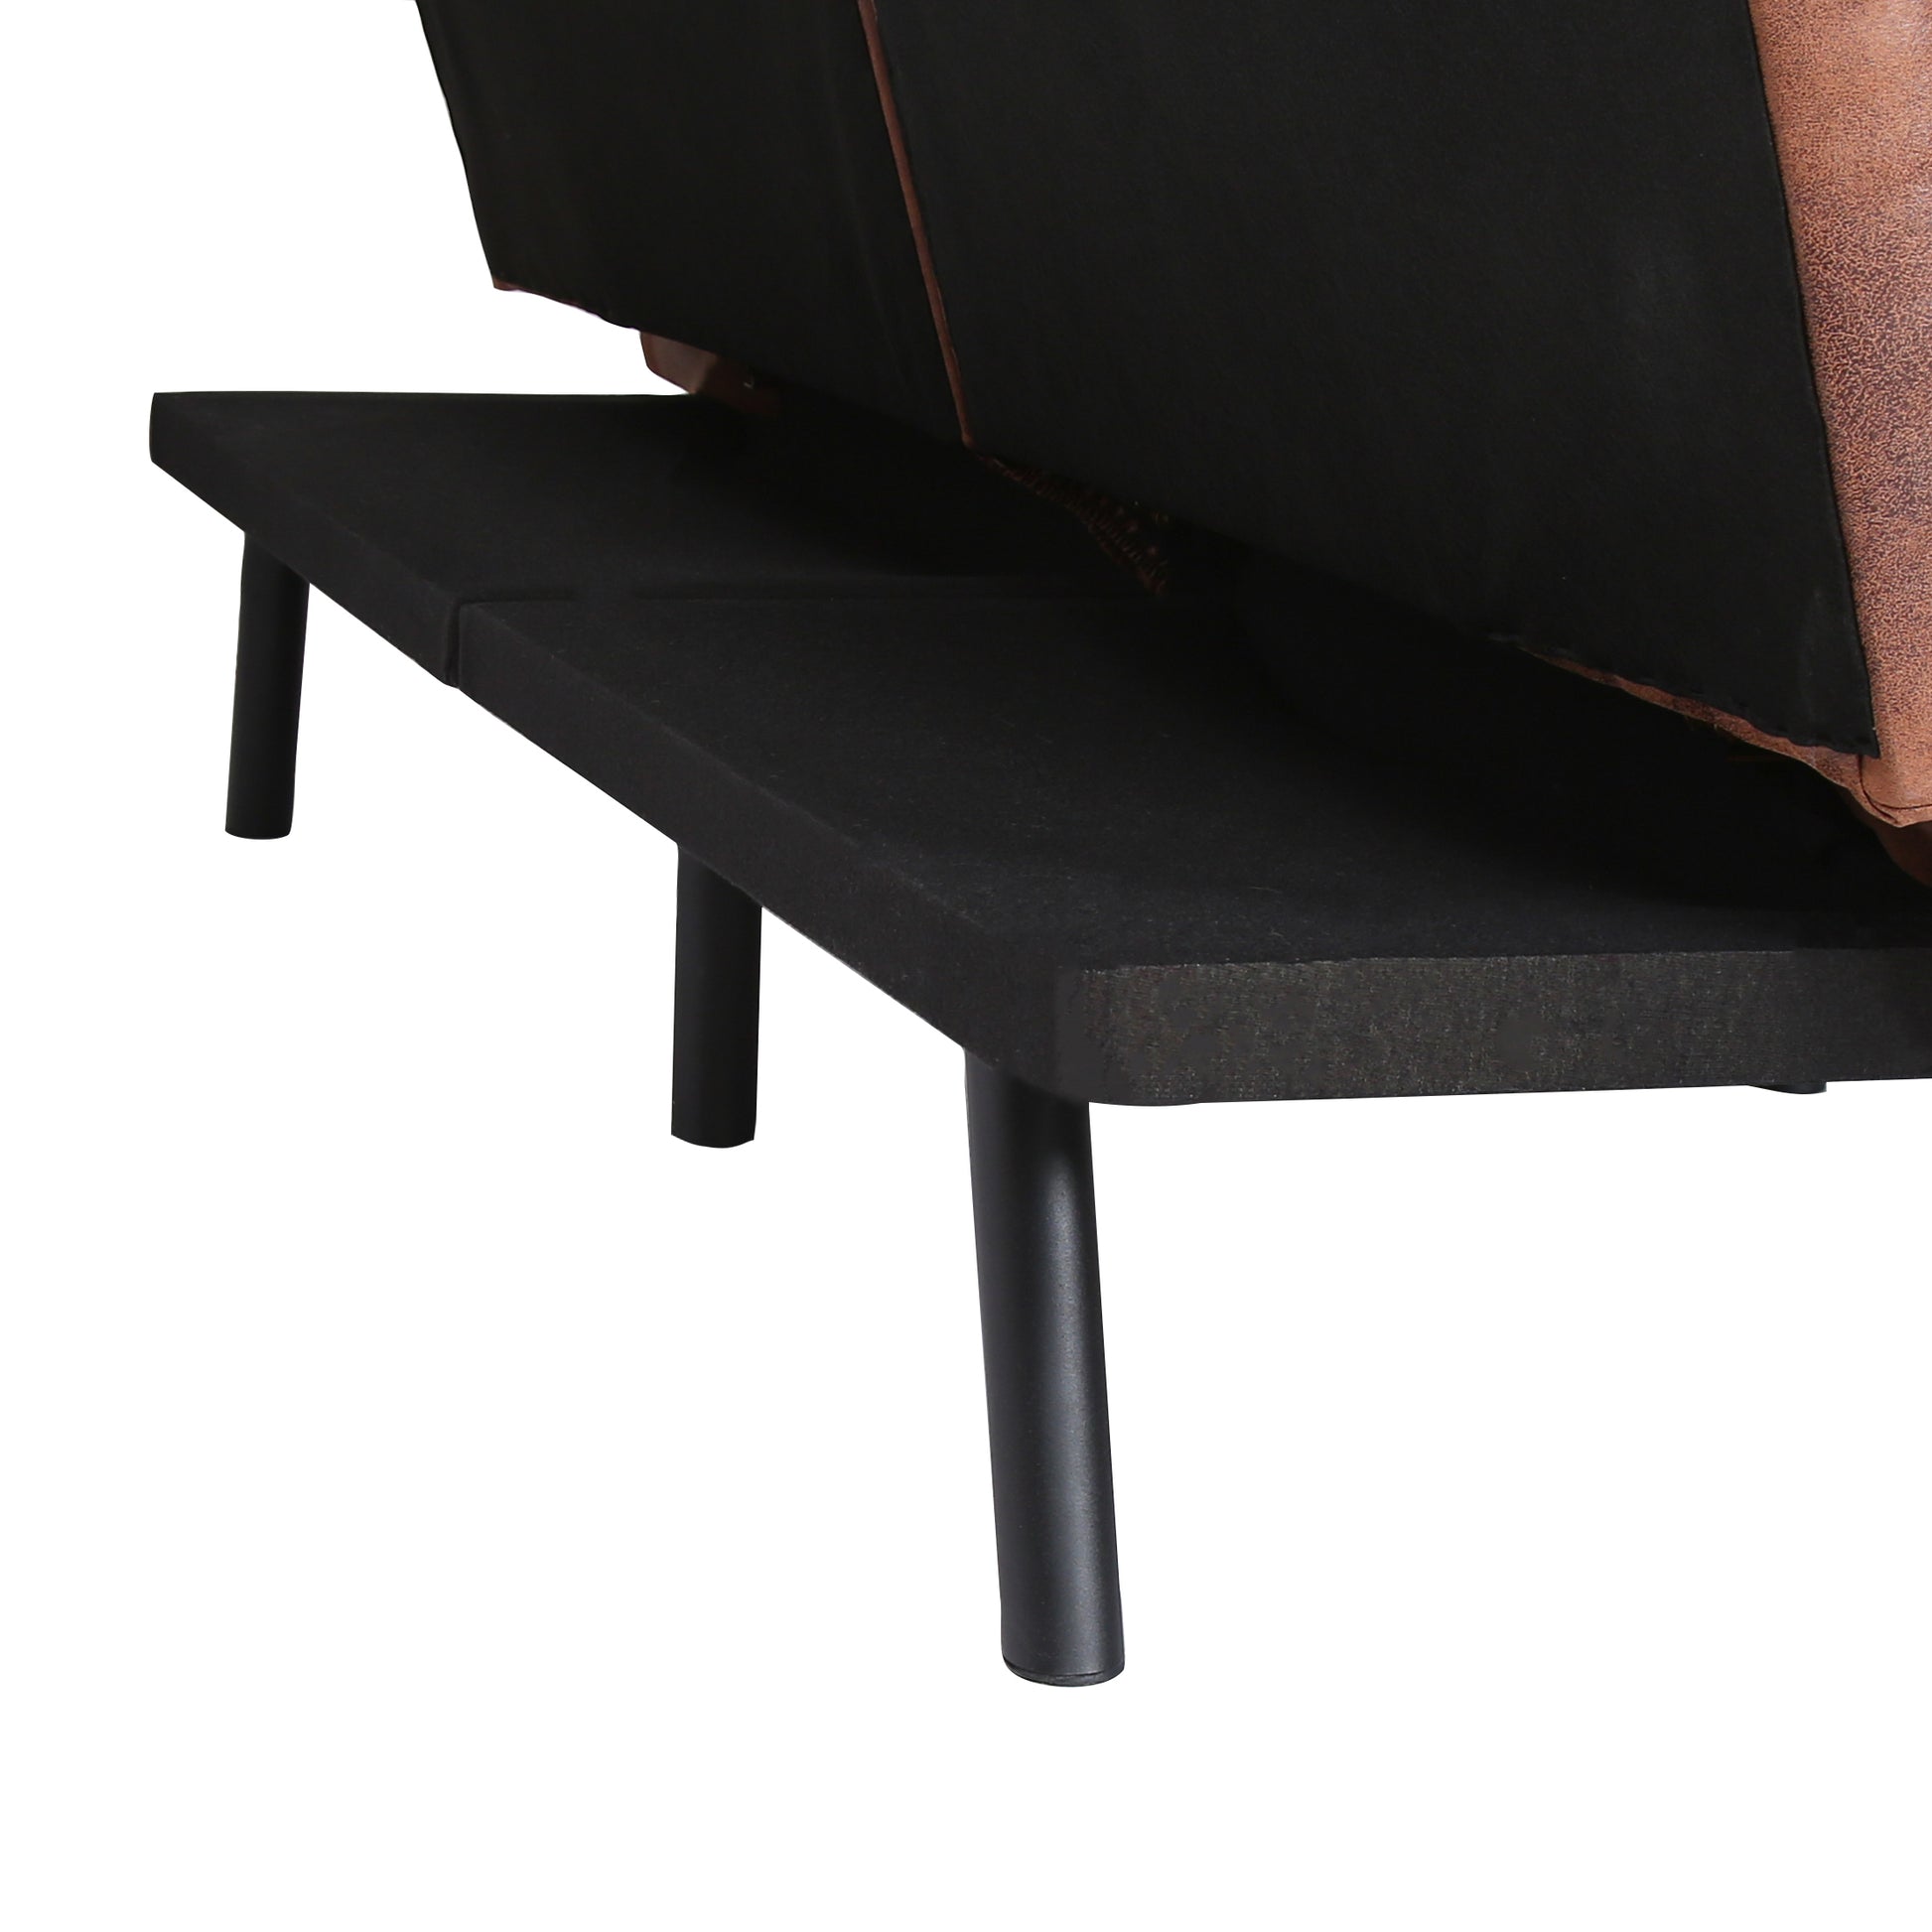 Convertible Futon Couch Bed, Modern Folding Sleeper Sofa